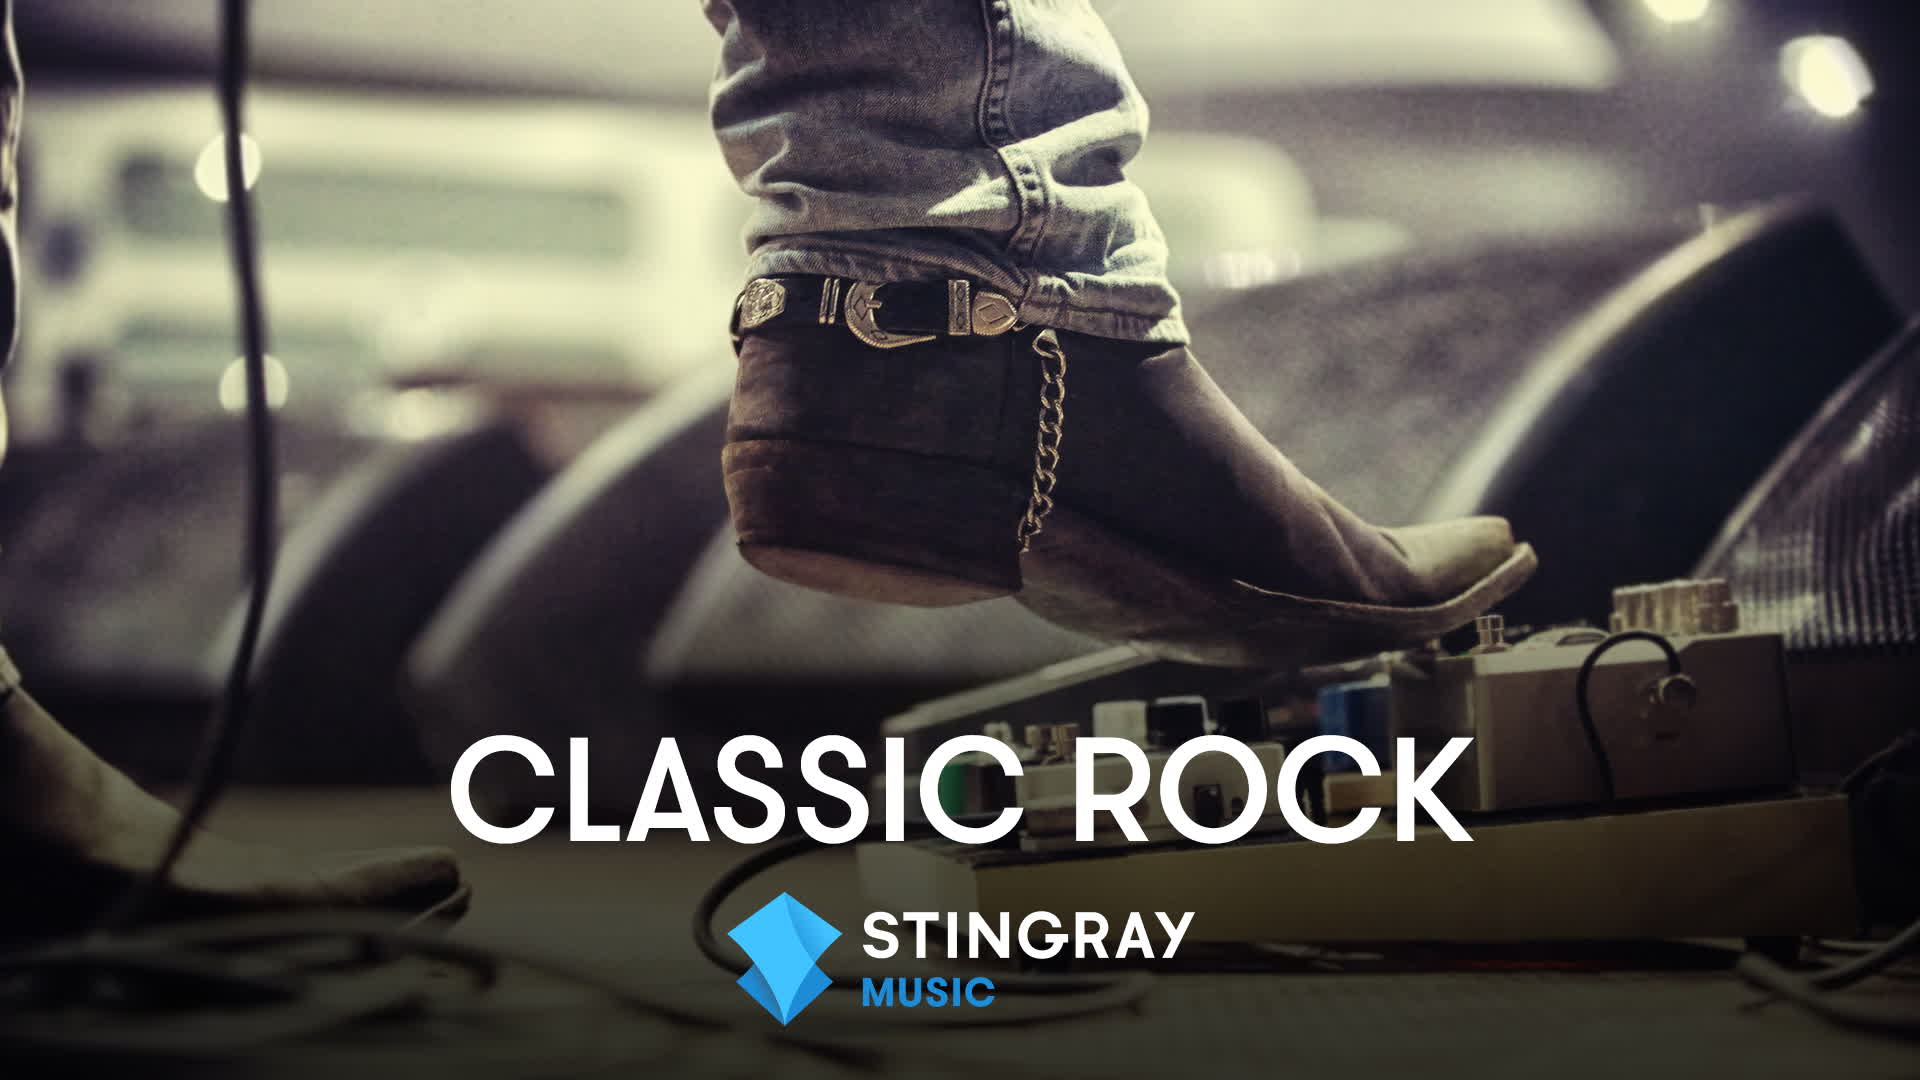 Stingray Classic Rock